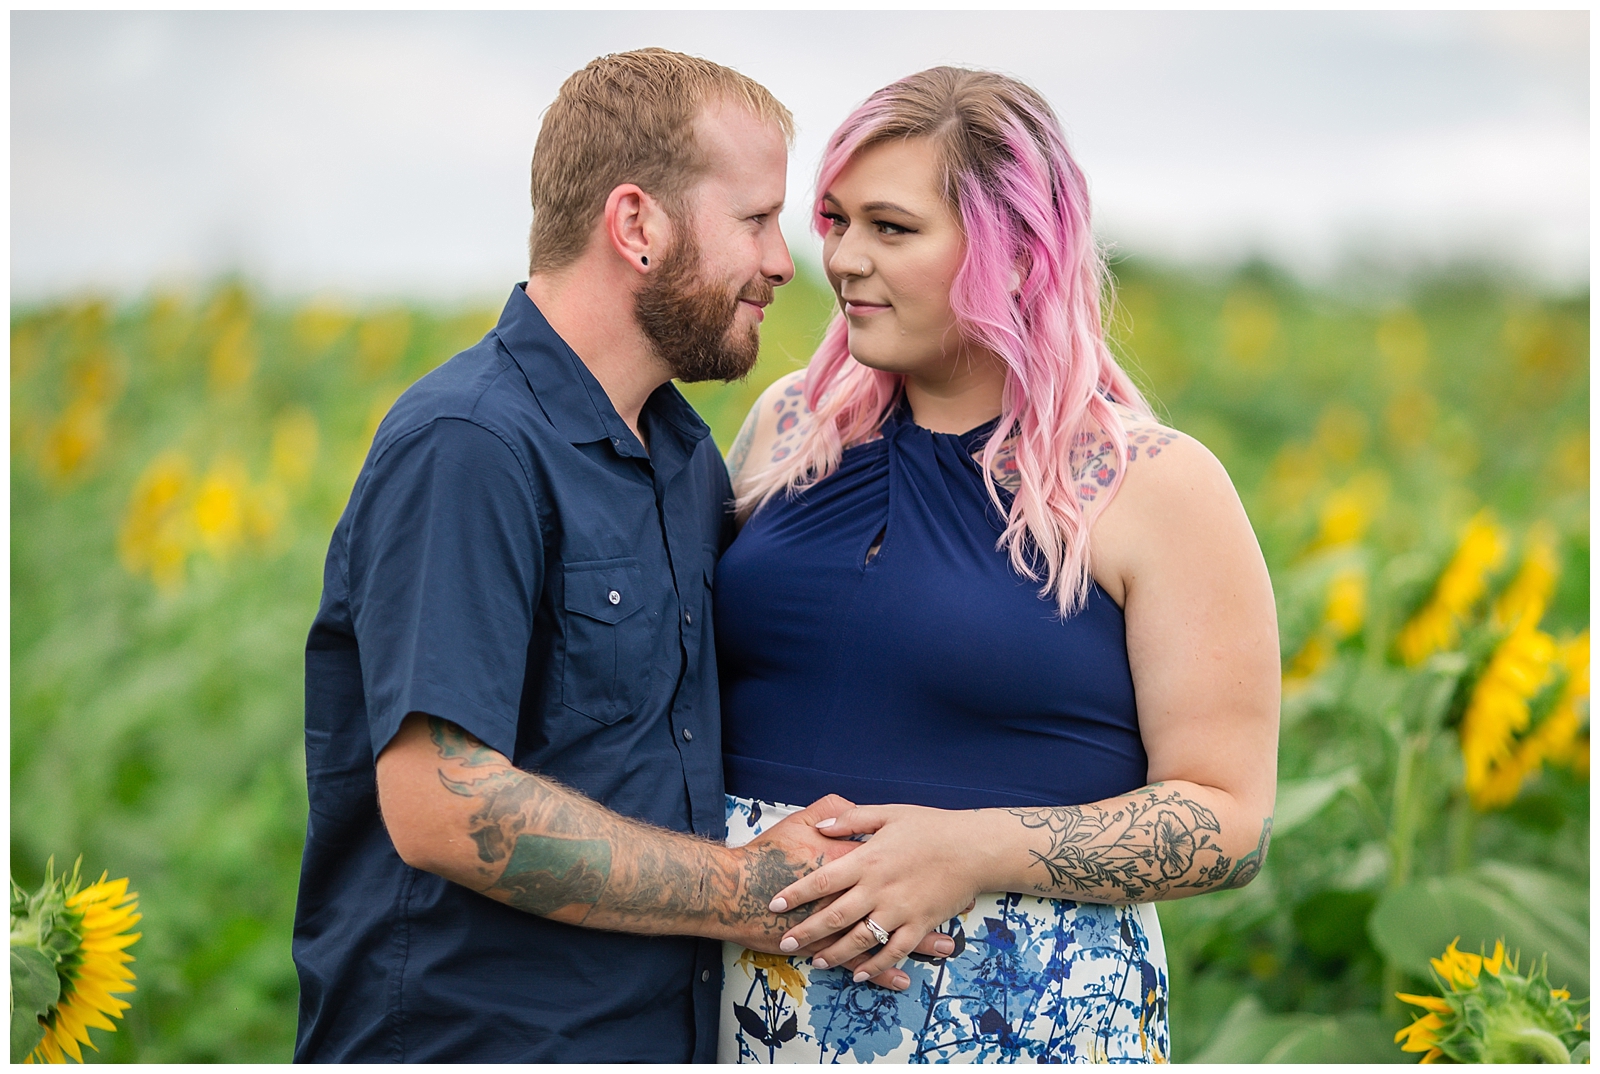 Photography at Grinter Sunflower Farms in Lawrence, Kansas, by Kansas City wedding photographers Wisdom-Watson Weddings.